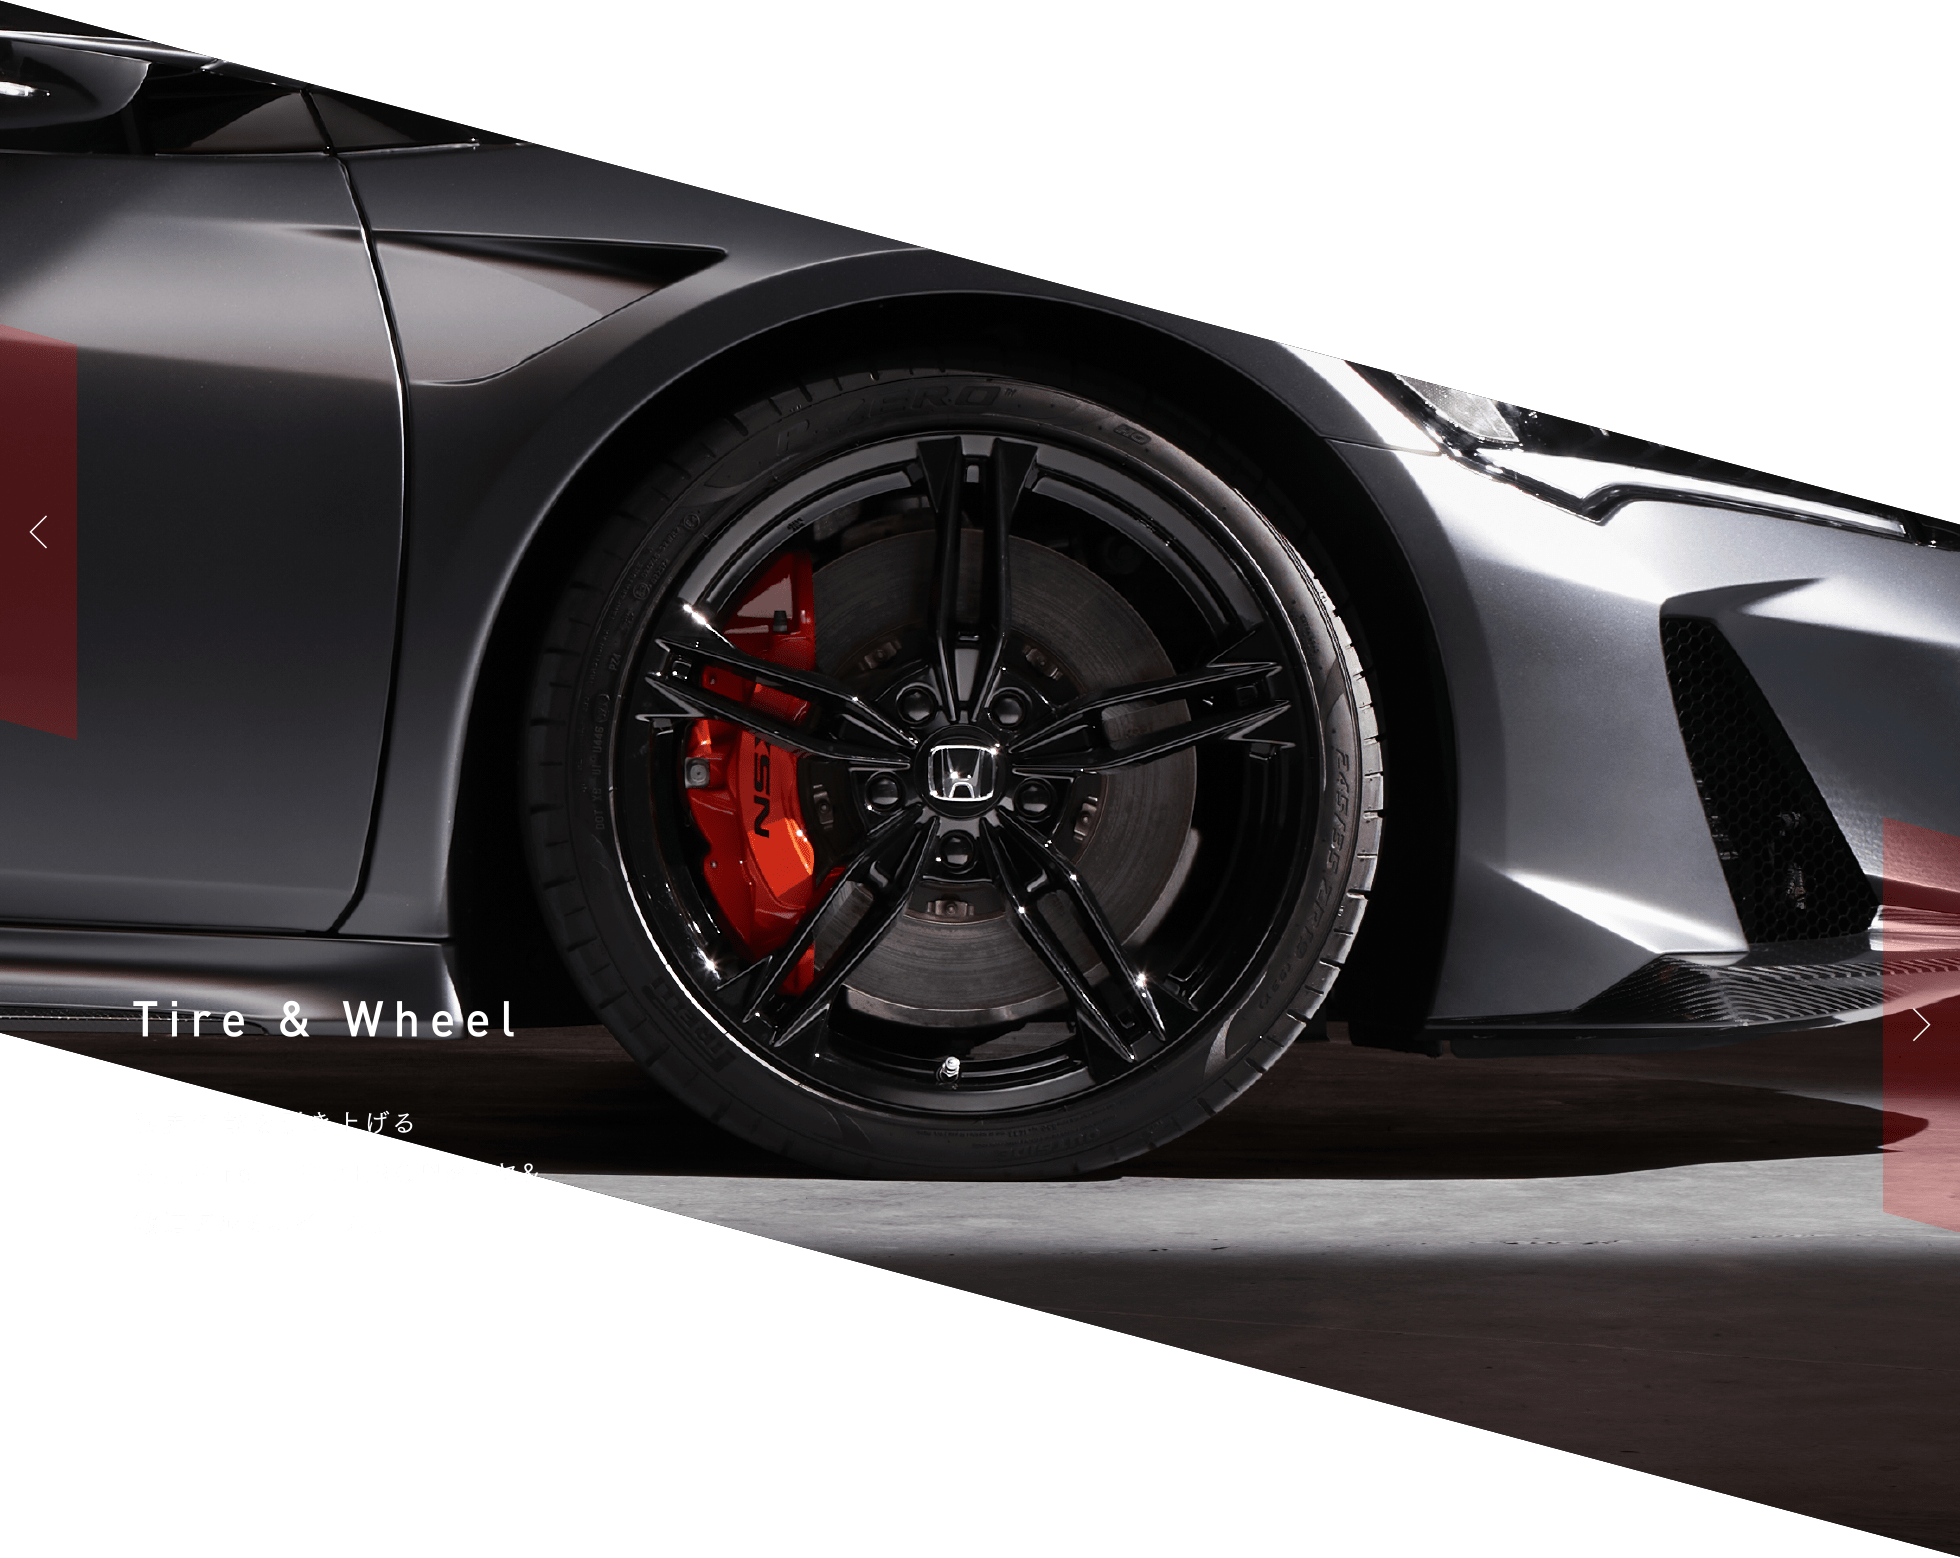 Tire & Wheel 限界性能を引き上げる専用Pirelli P ZERO™タイヤ&鍛造アルミホイール。